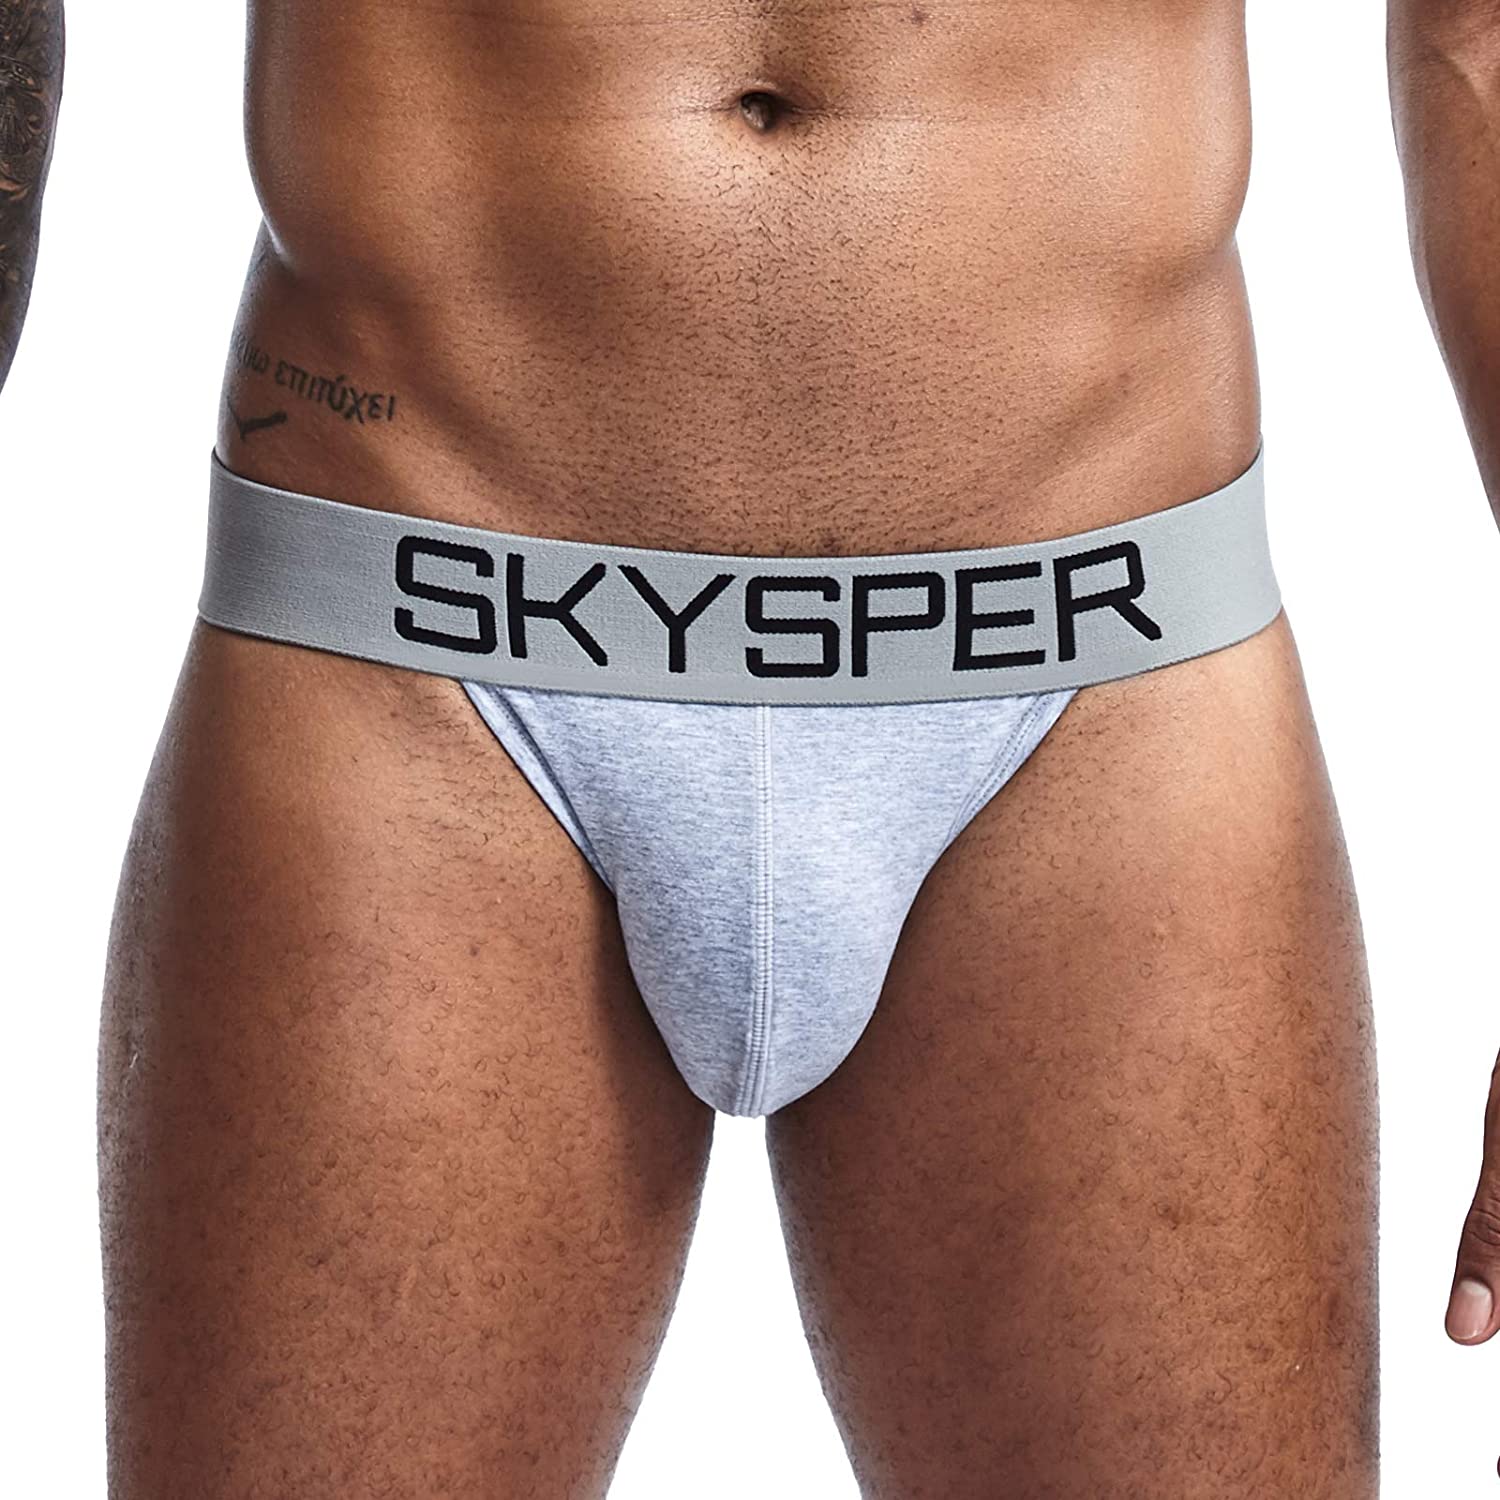 SKYSPER Mens Jockstrap Underwear Jock Straps Male Athletic Supporters for Men 